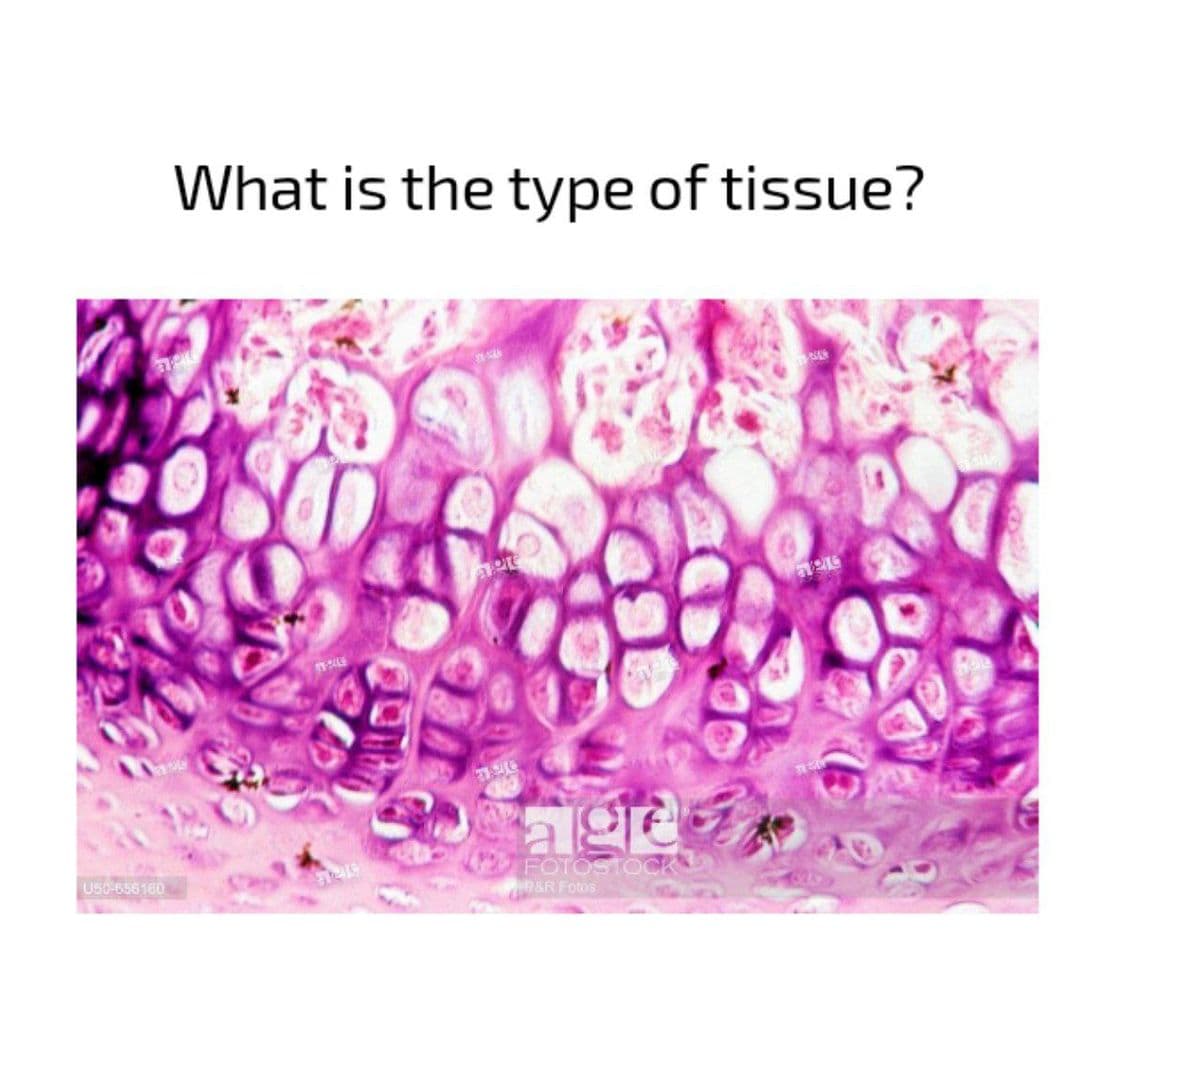 What is the type of tissue?
FOTOSTOCK
PRAR Fotos
U50-656160
